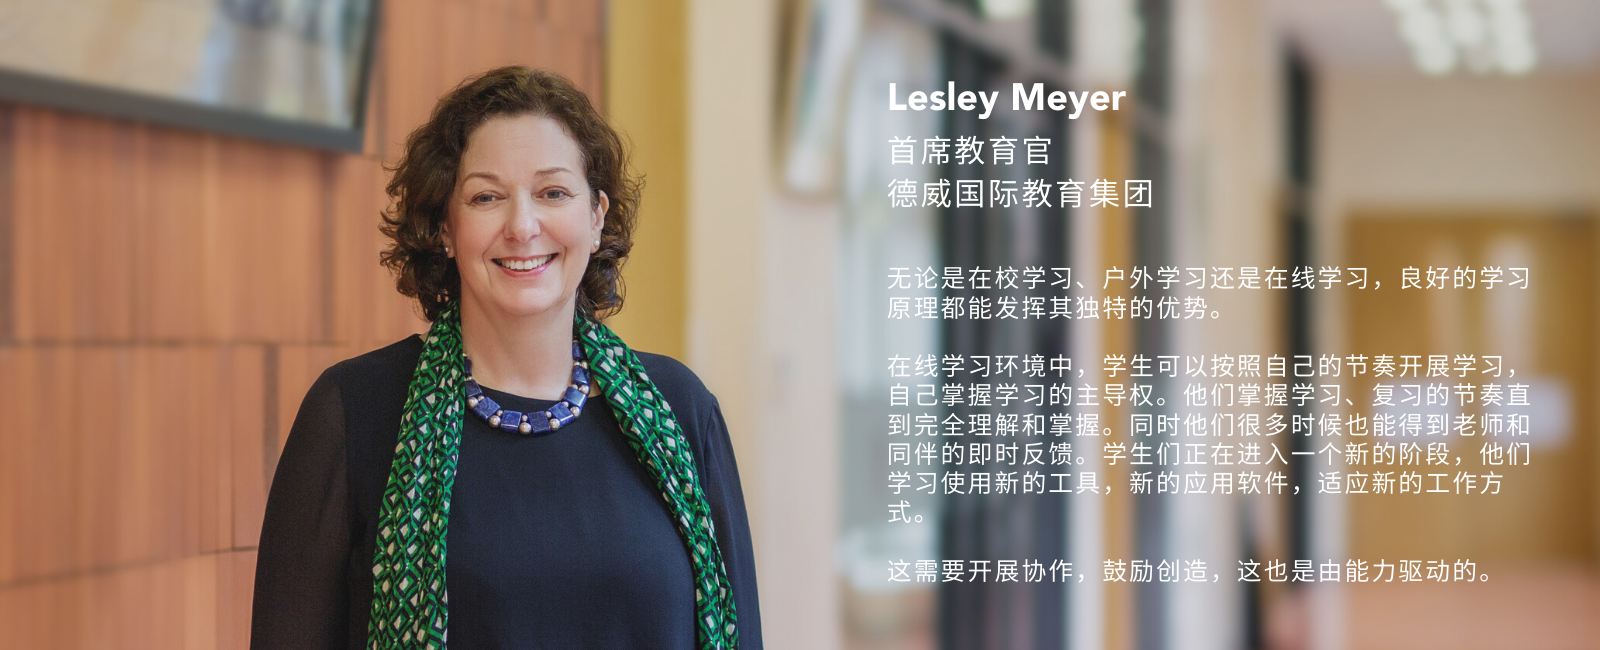 Lesley Meyer Message DCI